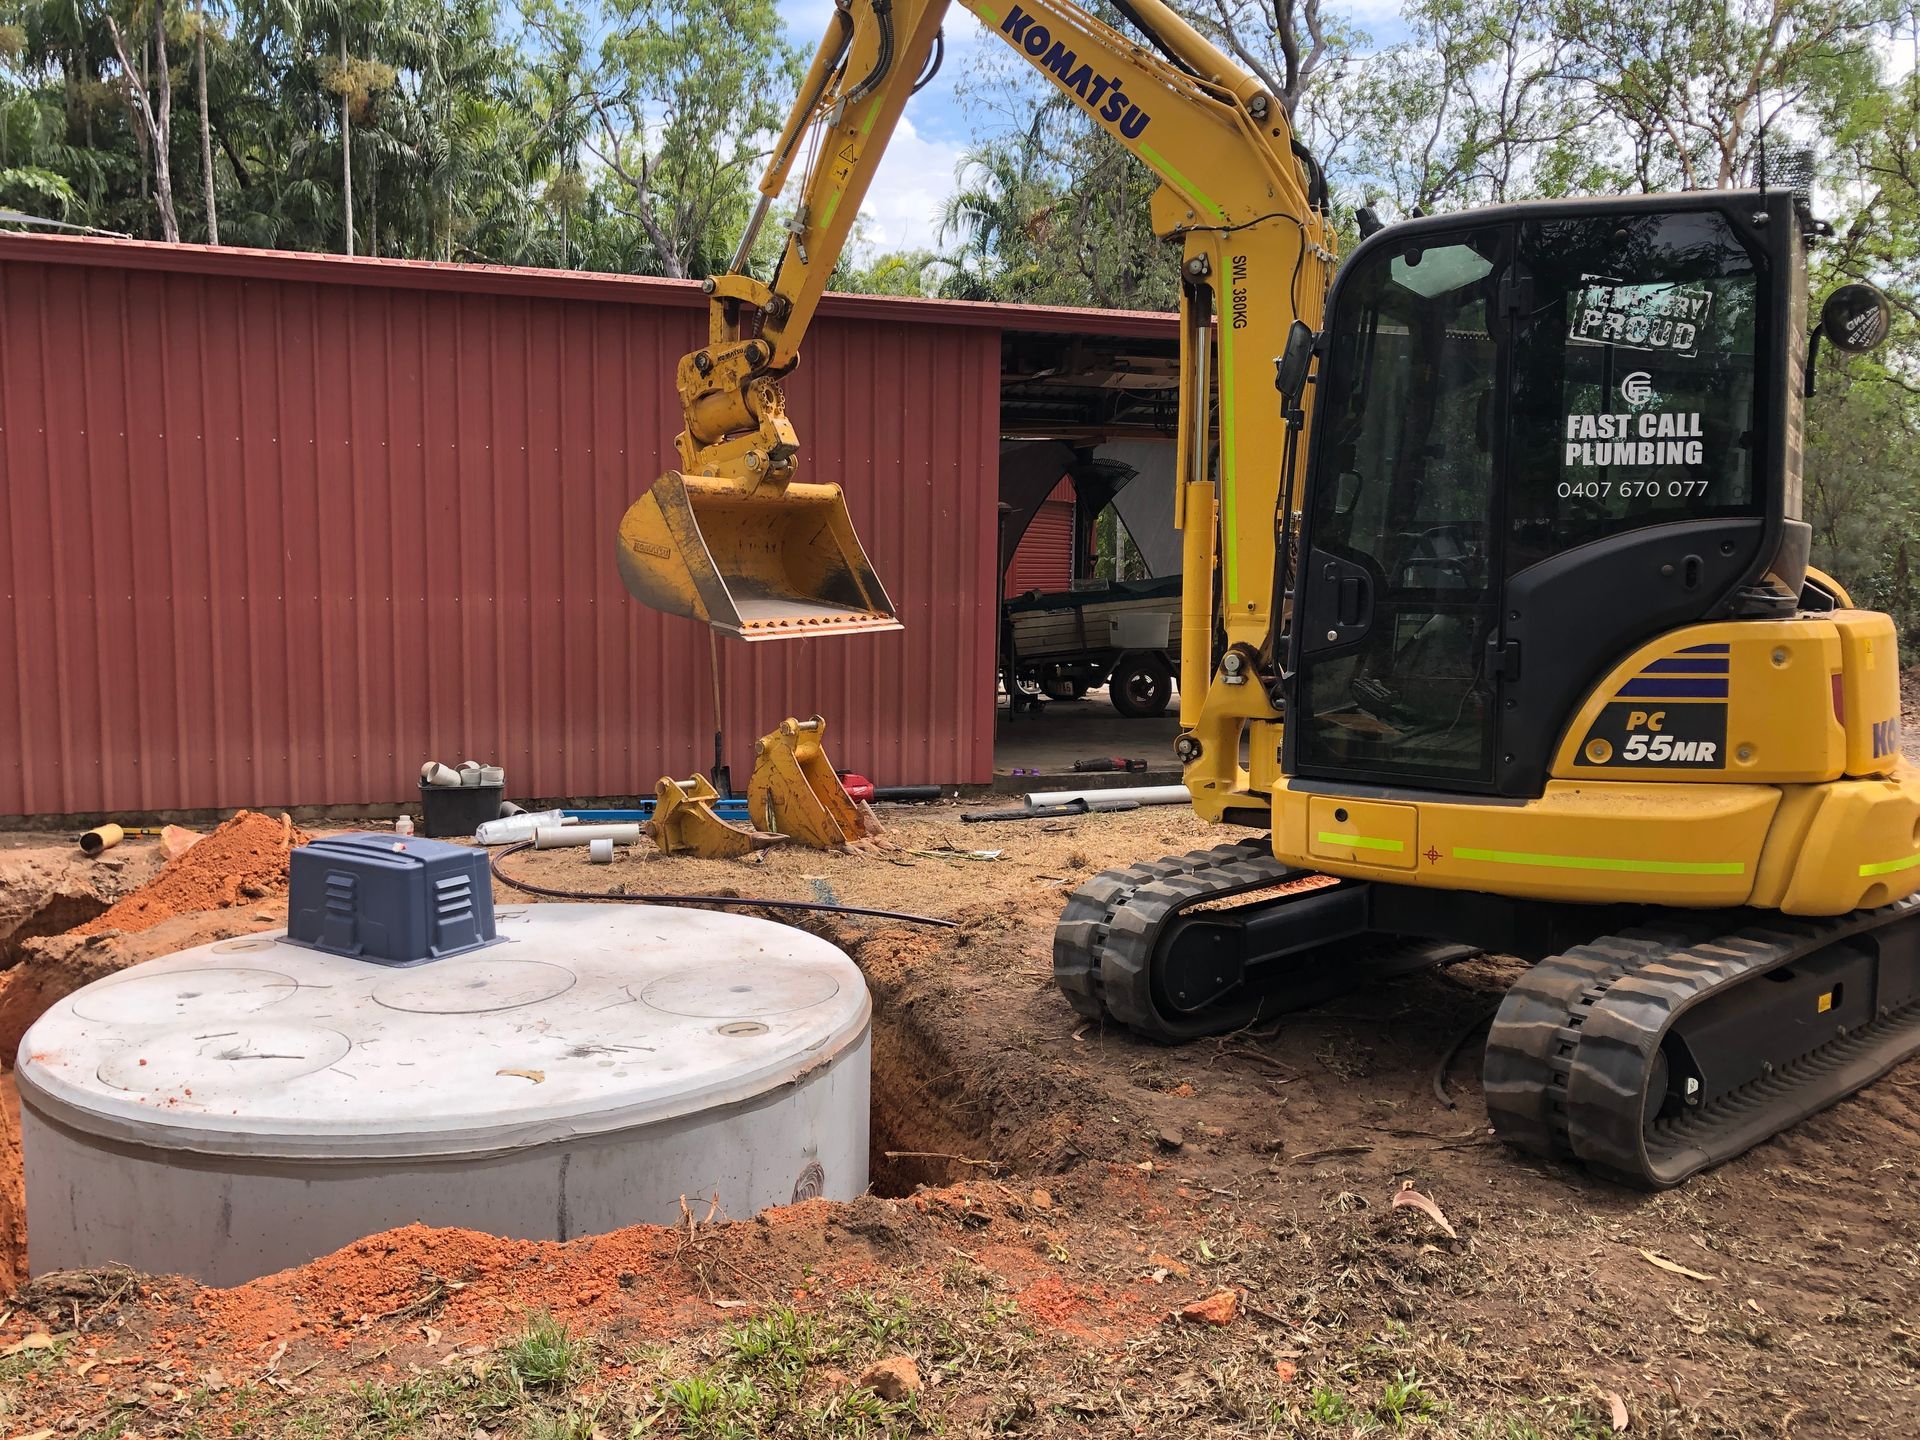 Digger filling in Tank hole -  Fast Call Plumbing & Pumping Darwin NT